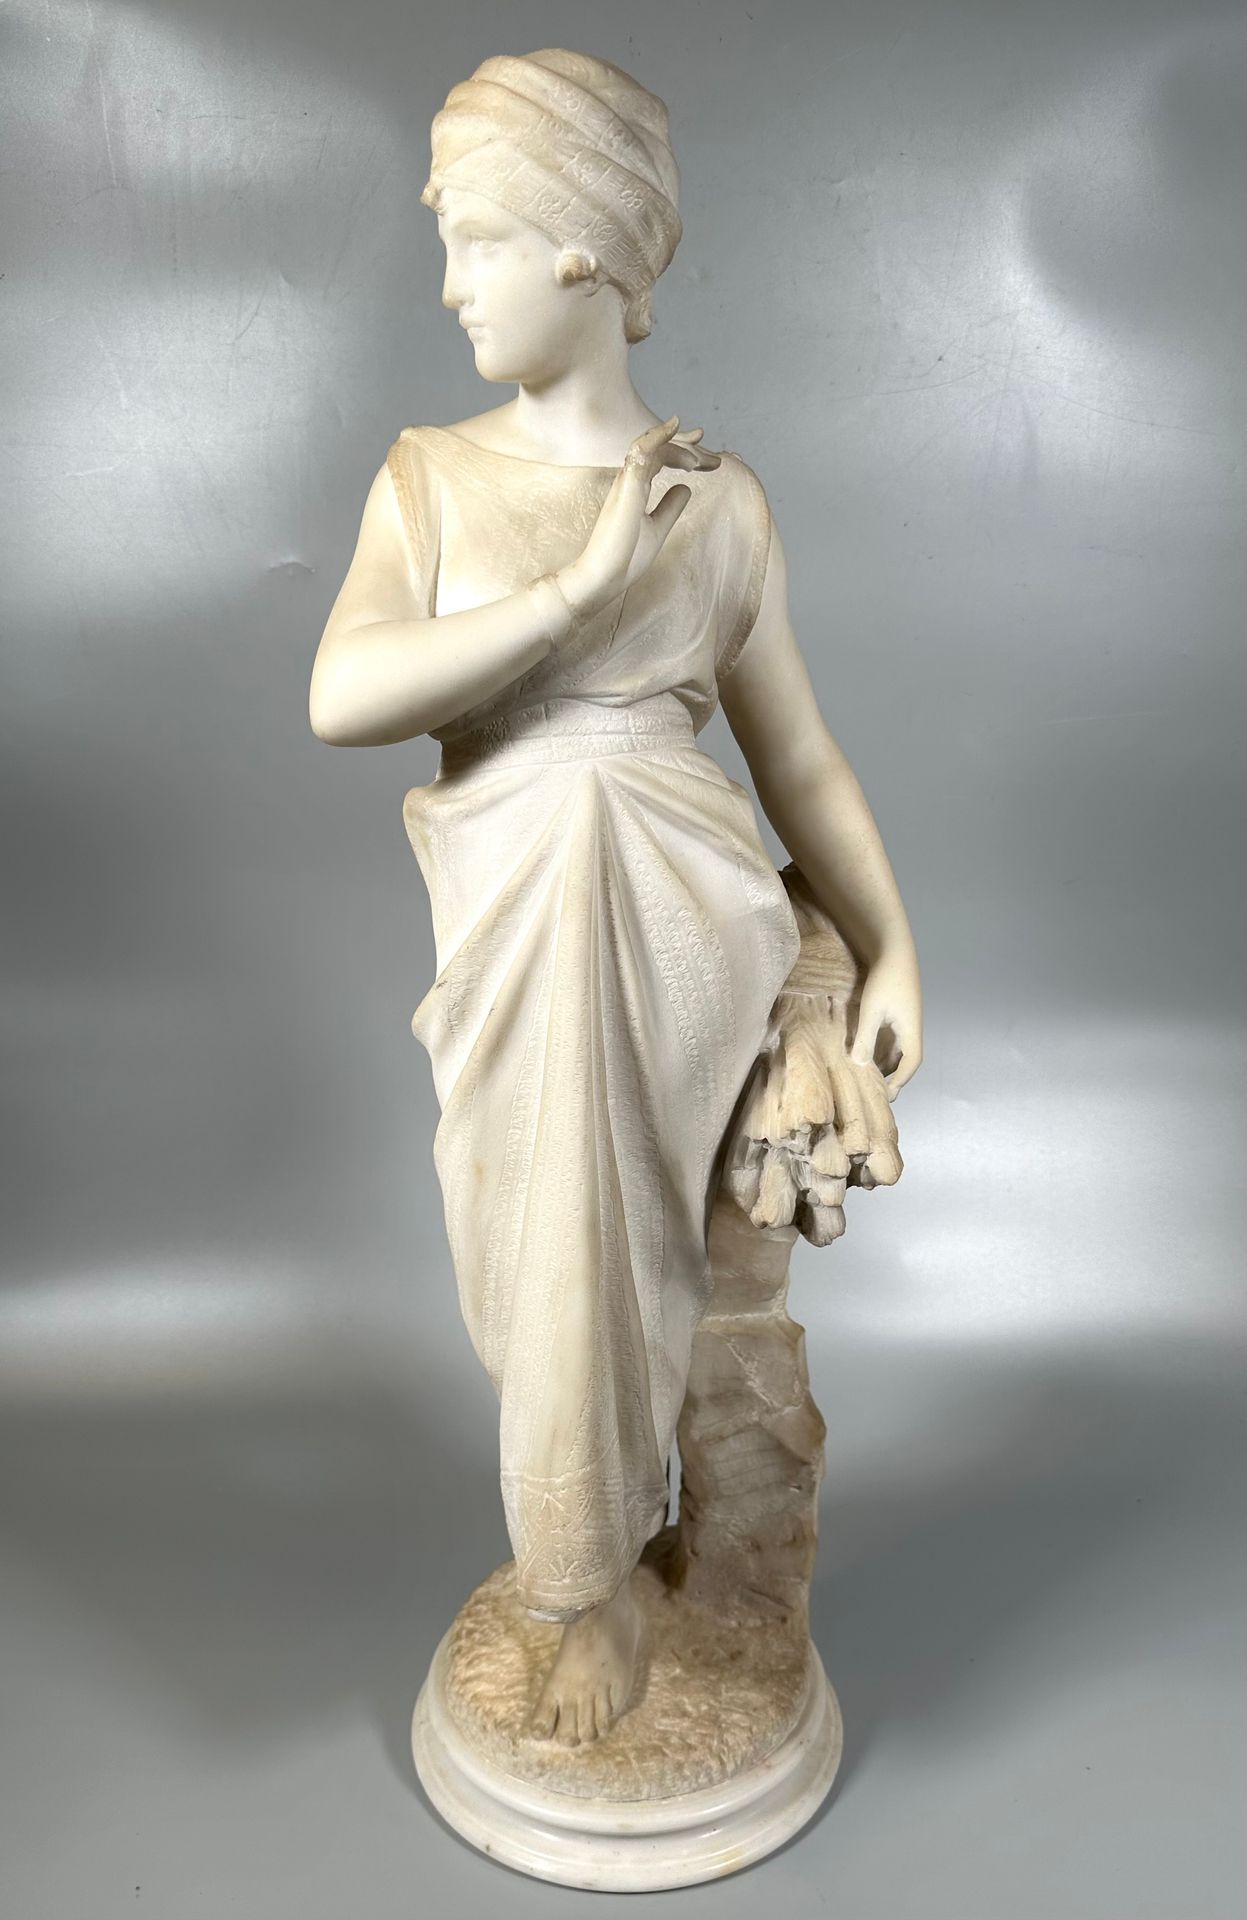 Null Guglielmo PUGI (c.1850-1915)
La glaneuse
Sculpture en marbre blanc, signée &hellip;